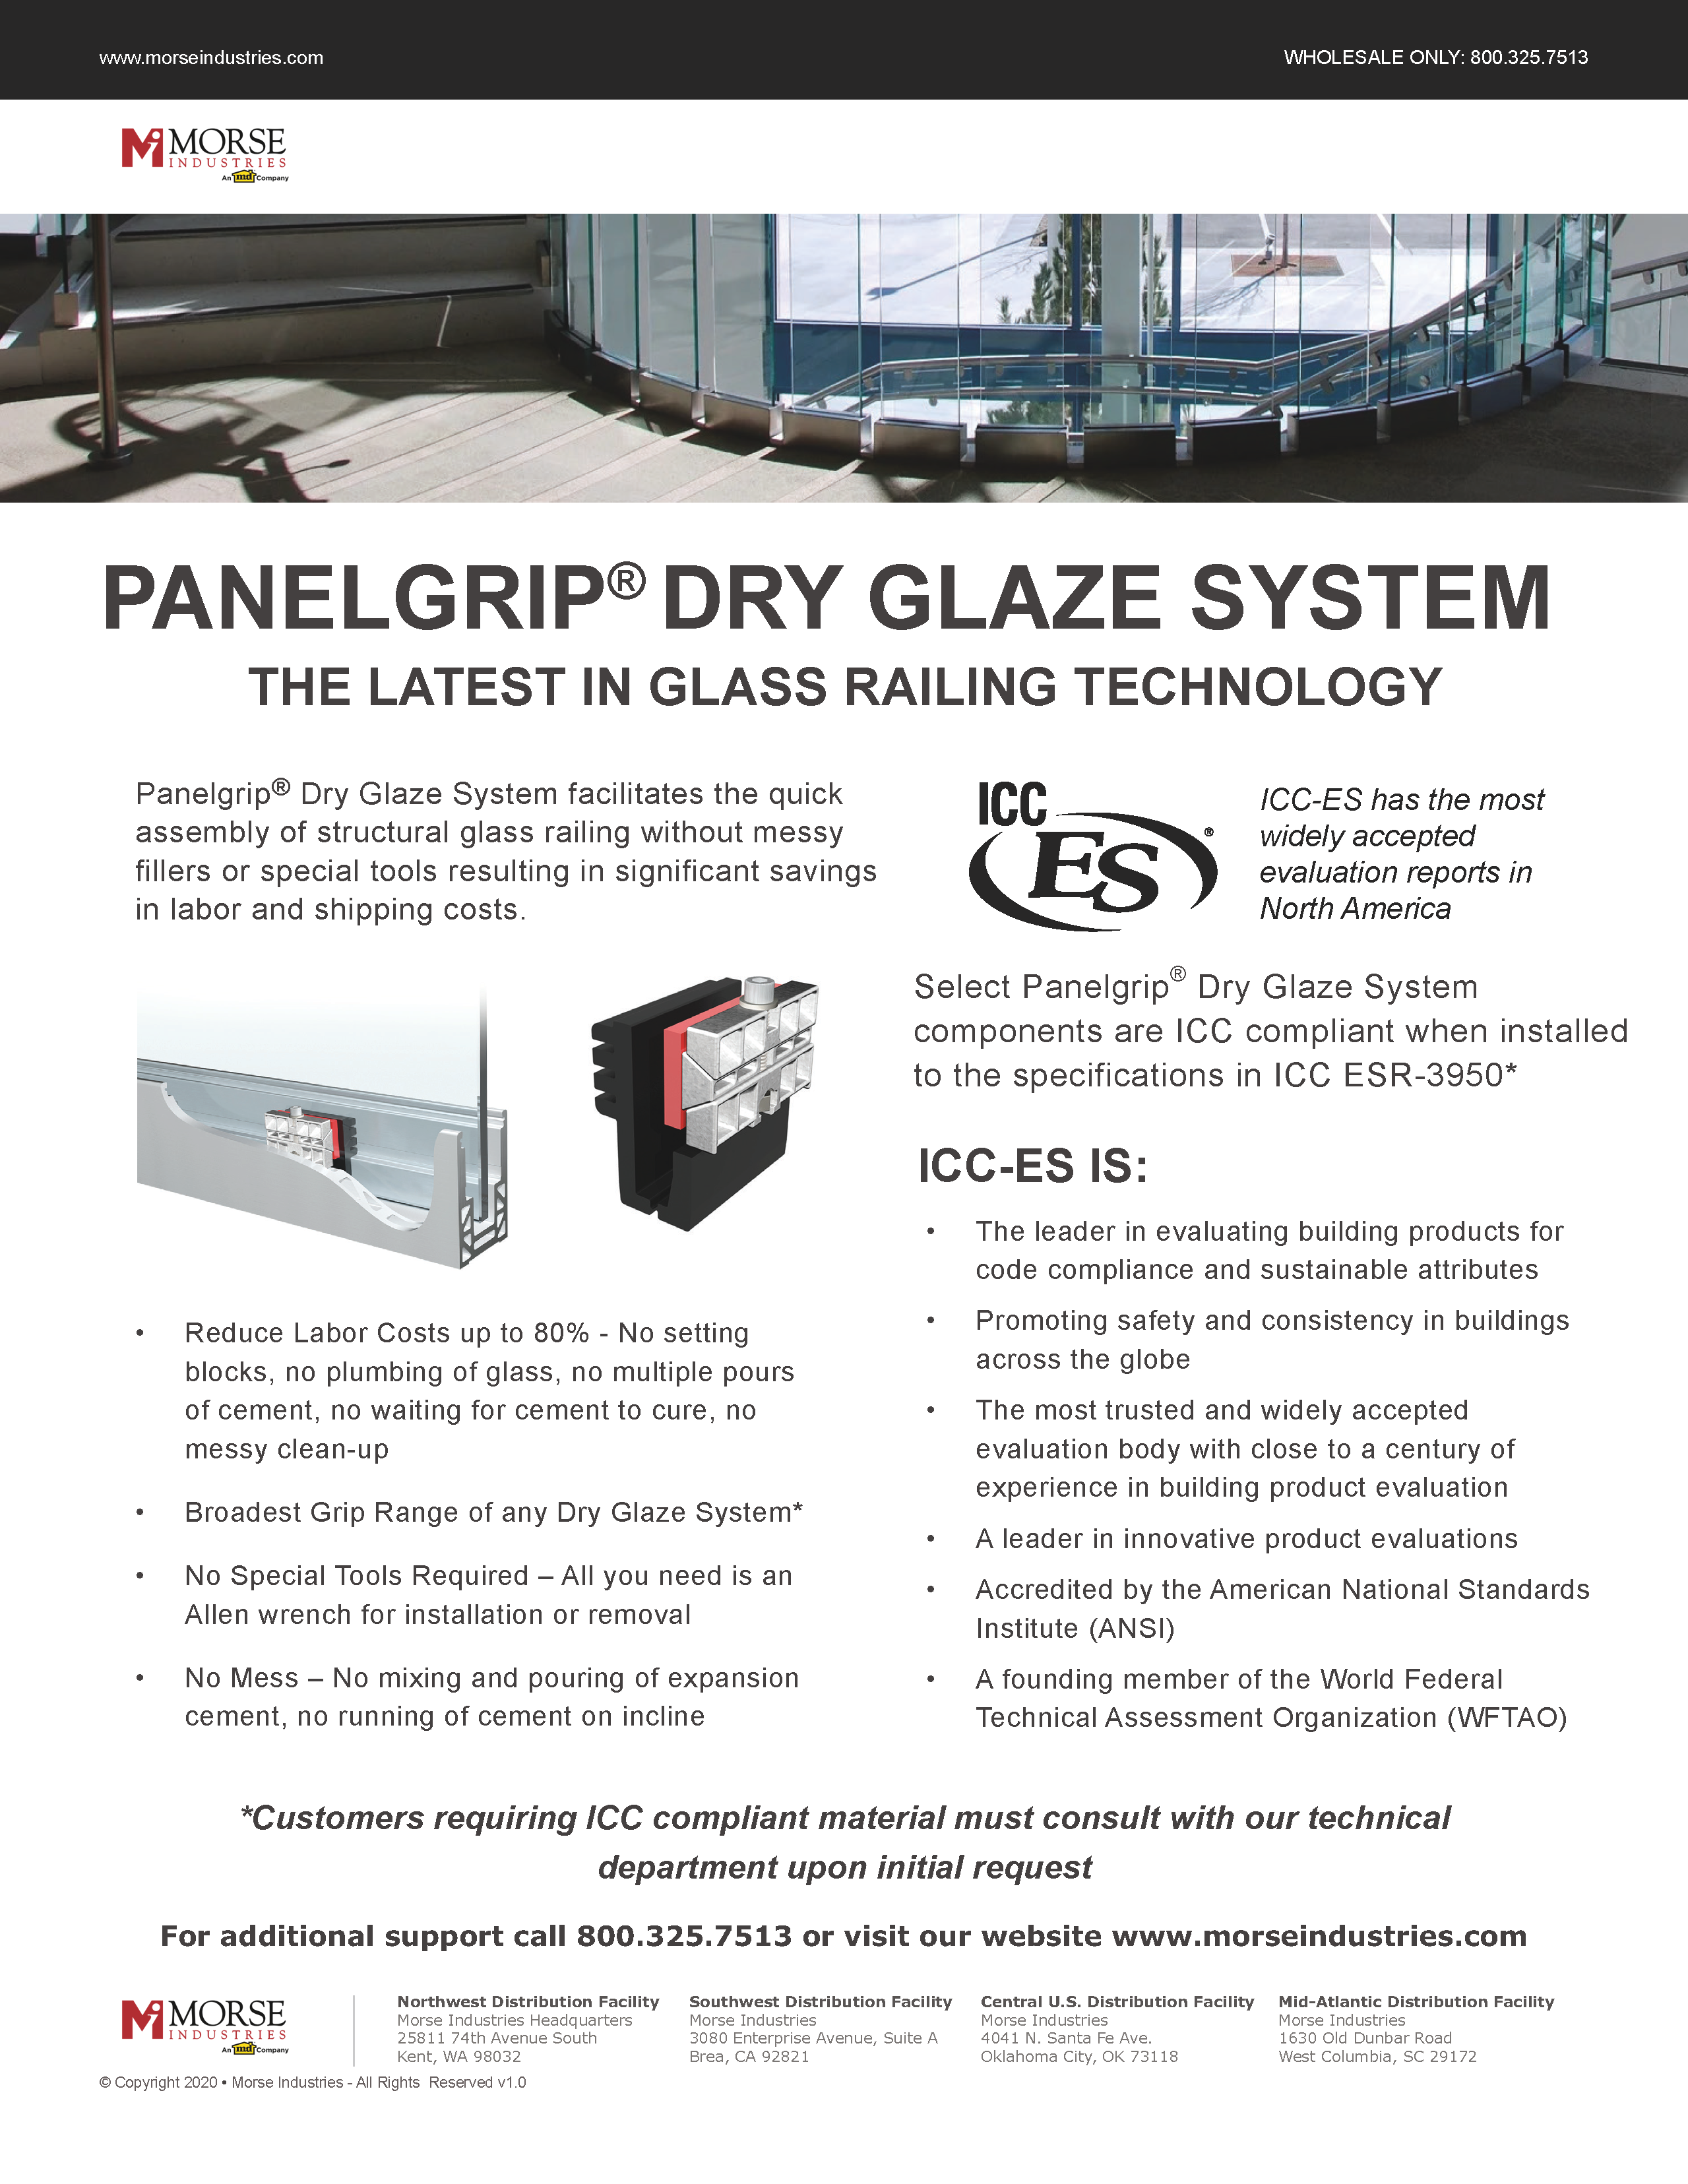 Panelgrip® Dry Glaze System